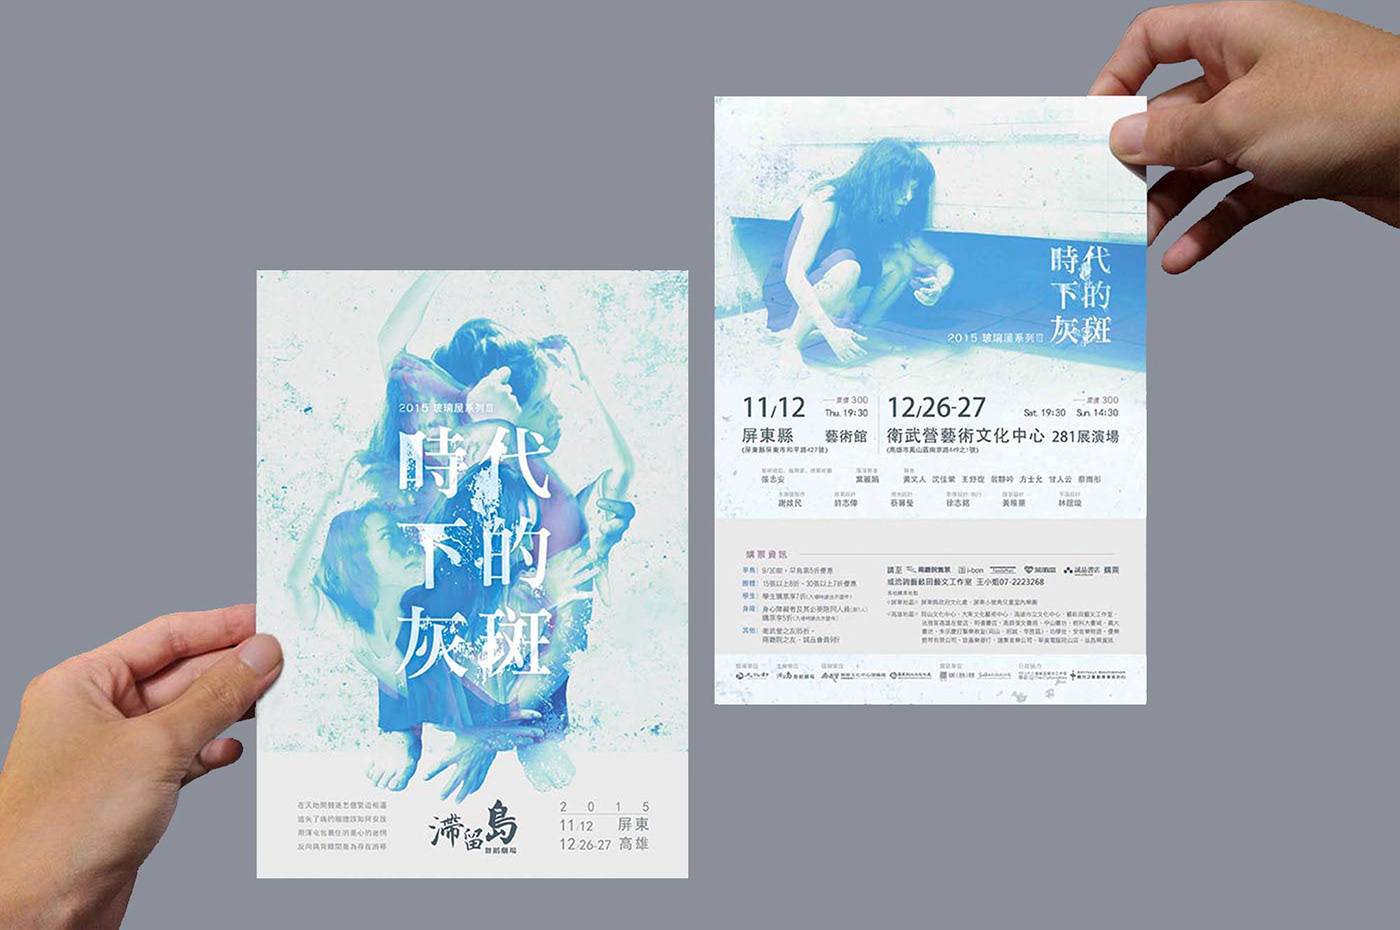 表演藝術 視覺設計 舞蹈節目 平面設計 活動文宣 graphic design  DANCE   林誼璇 Yi-Syuan Lin visual design